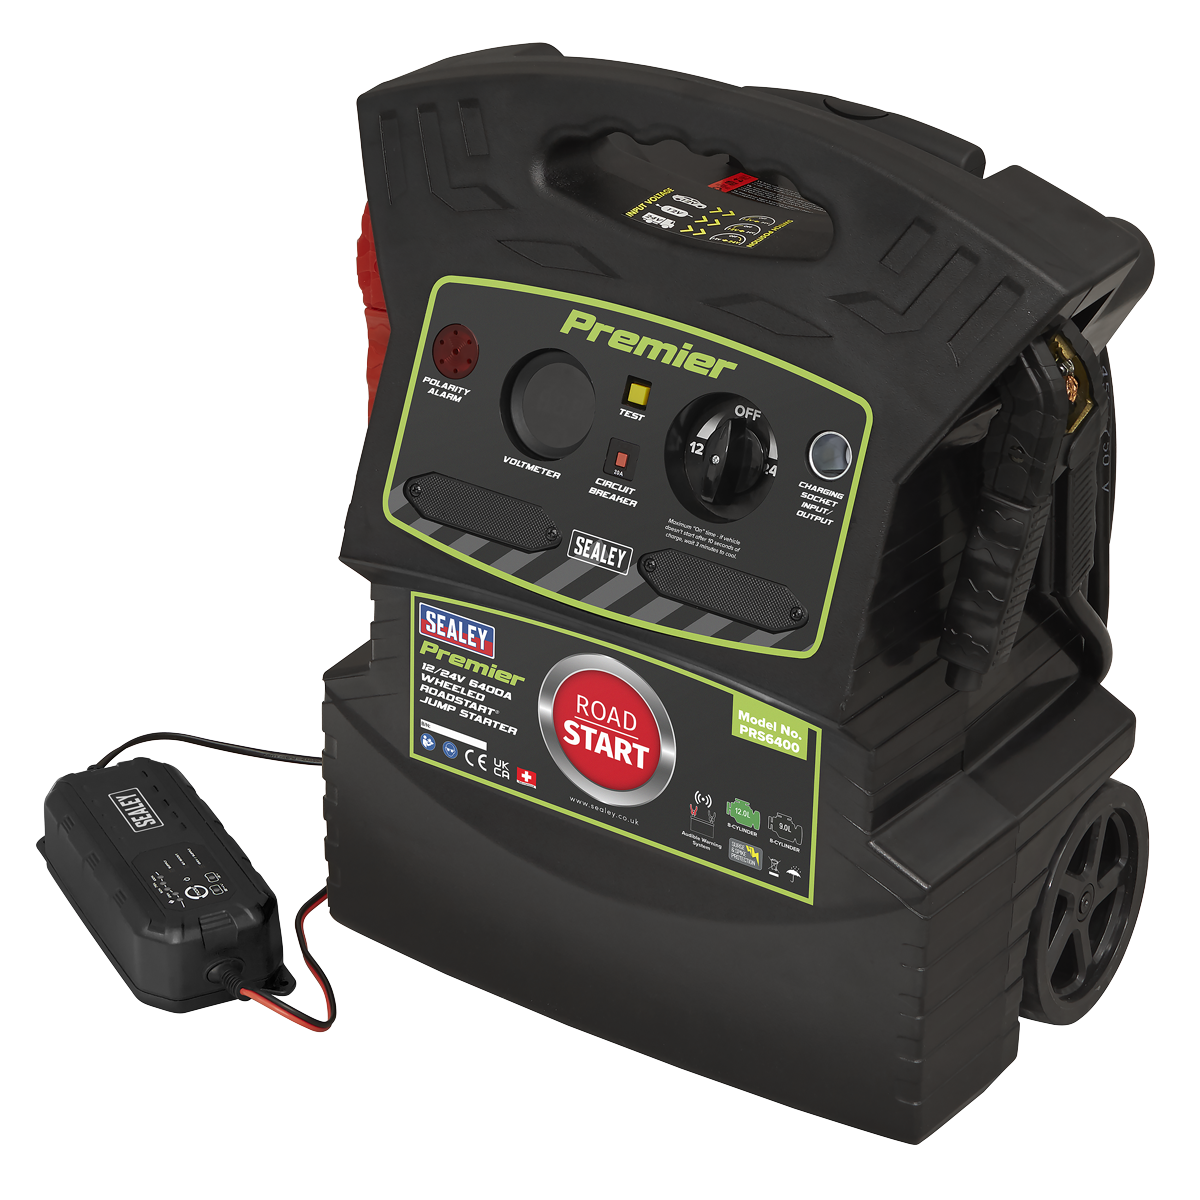 Sealey premier roadside assistant battery starter